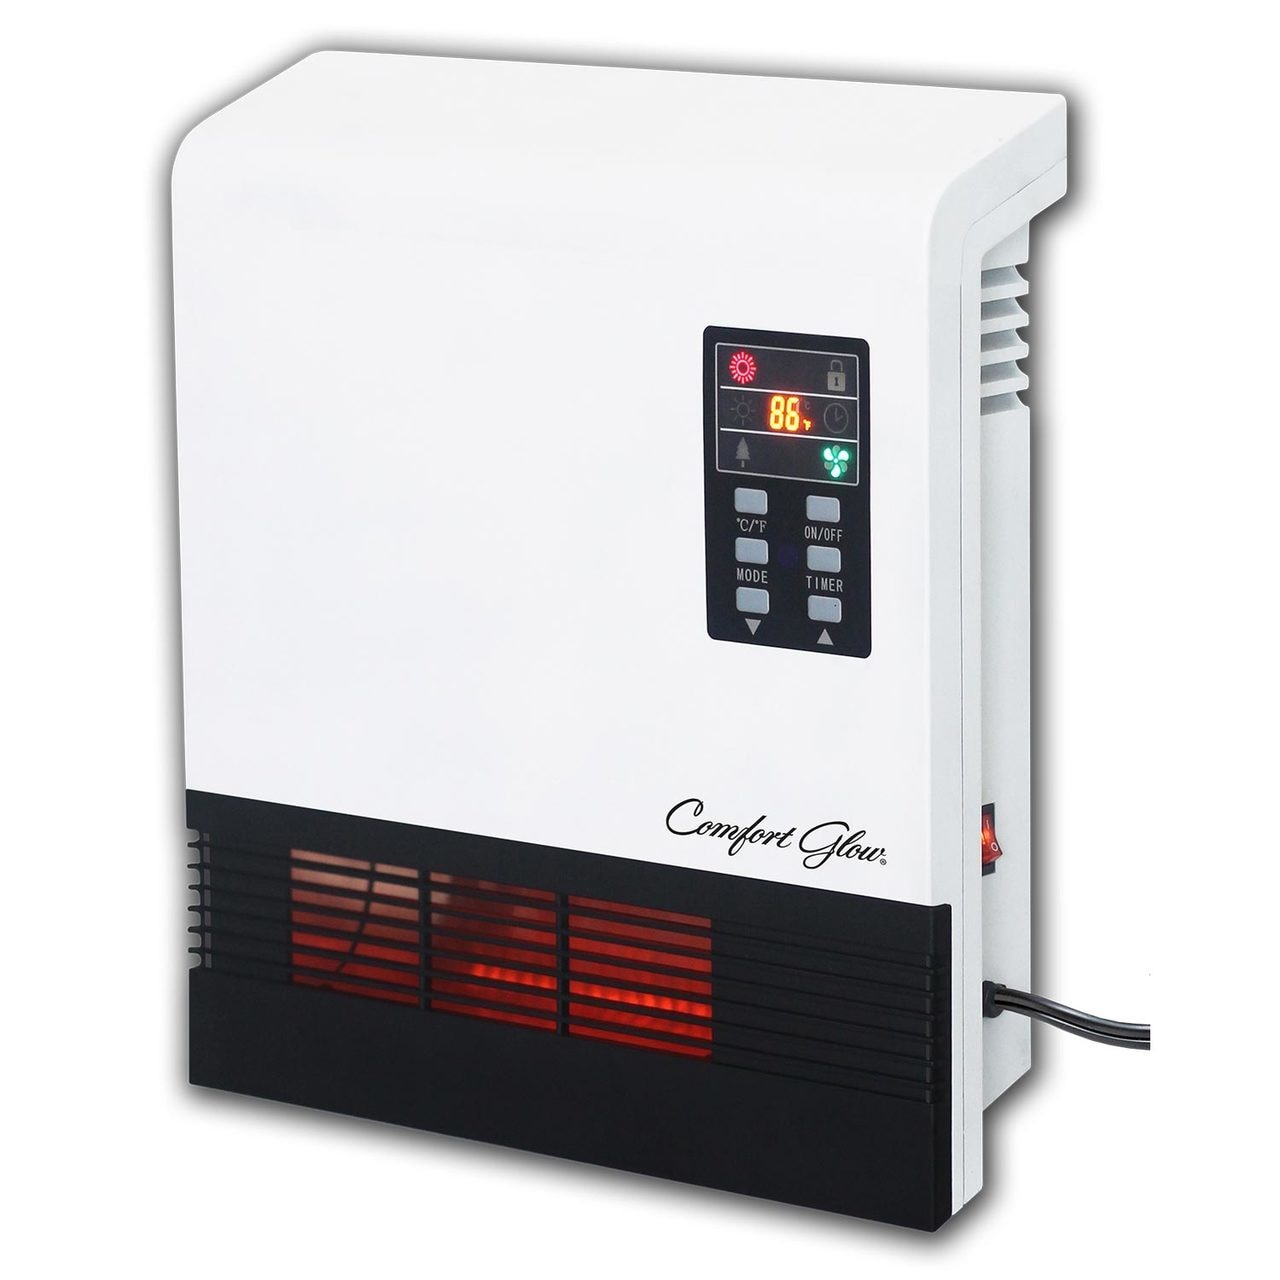 QWH2100 Comfort Furnace, 15 A, 120 VAC, 1500 W, 5120 Btu, 1000 sq-ft Heating Area, Remote Control